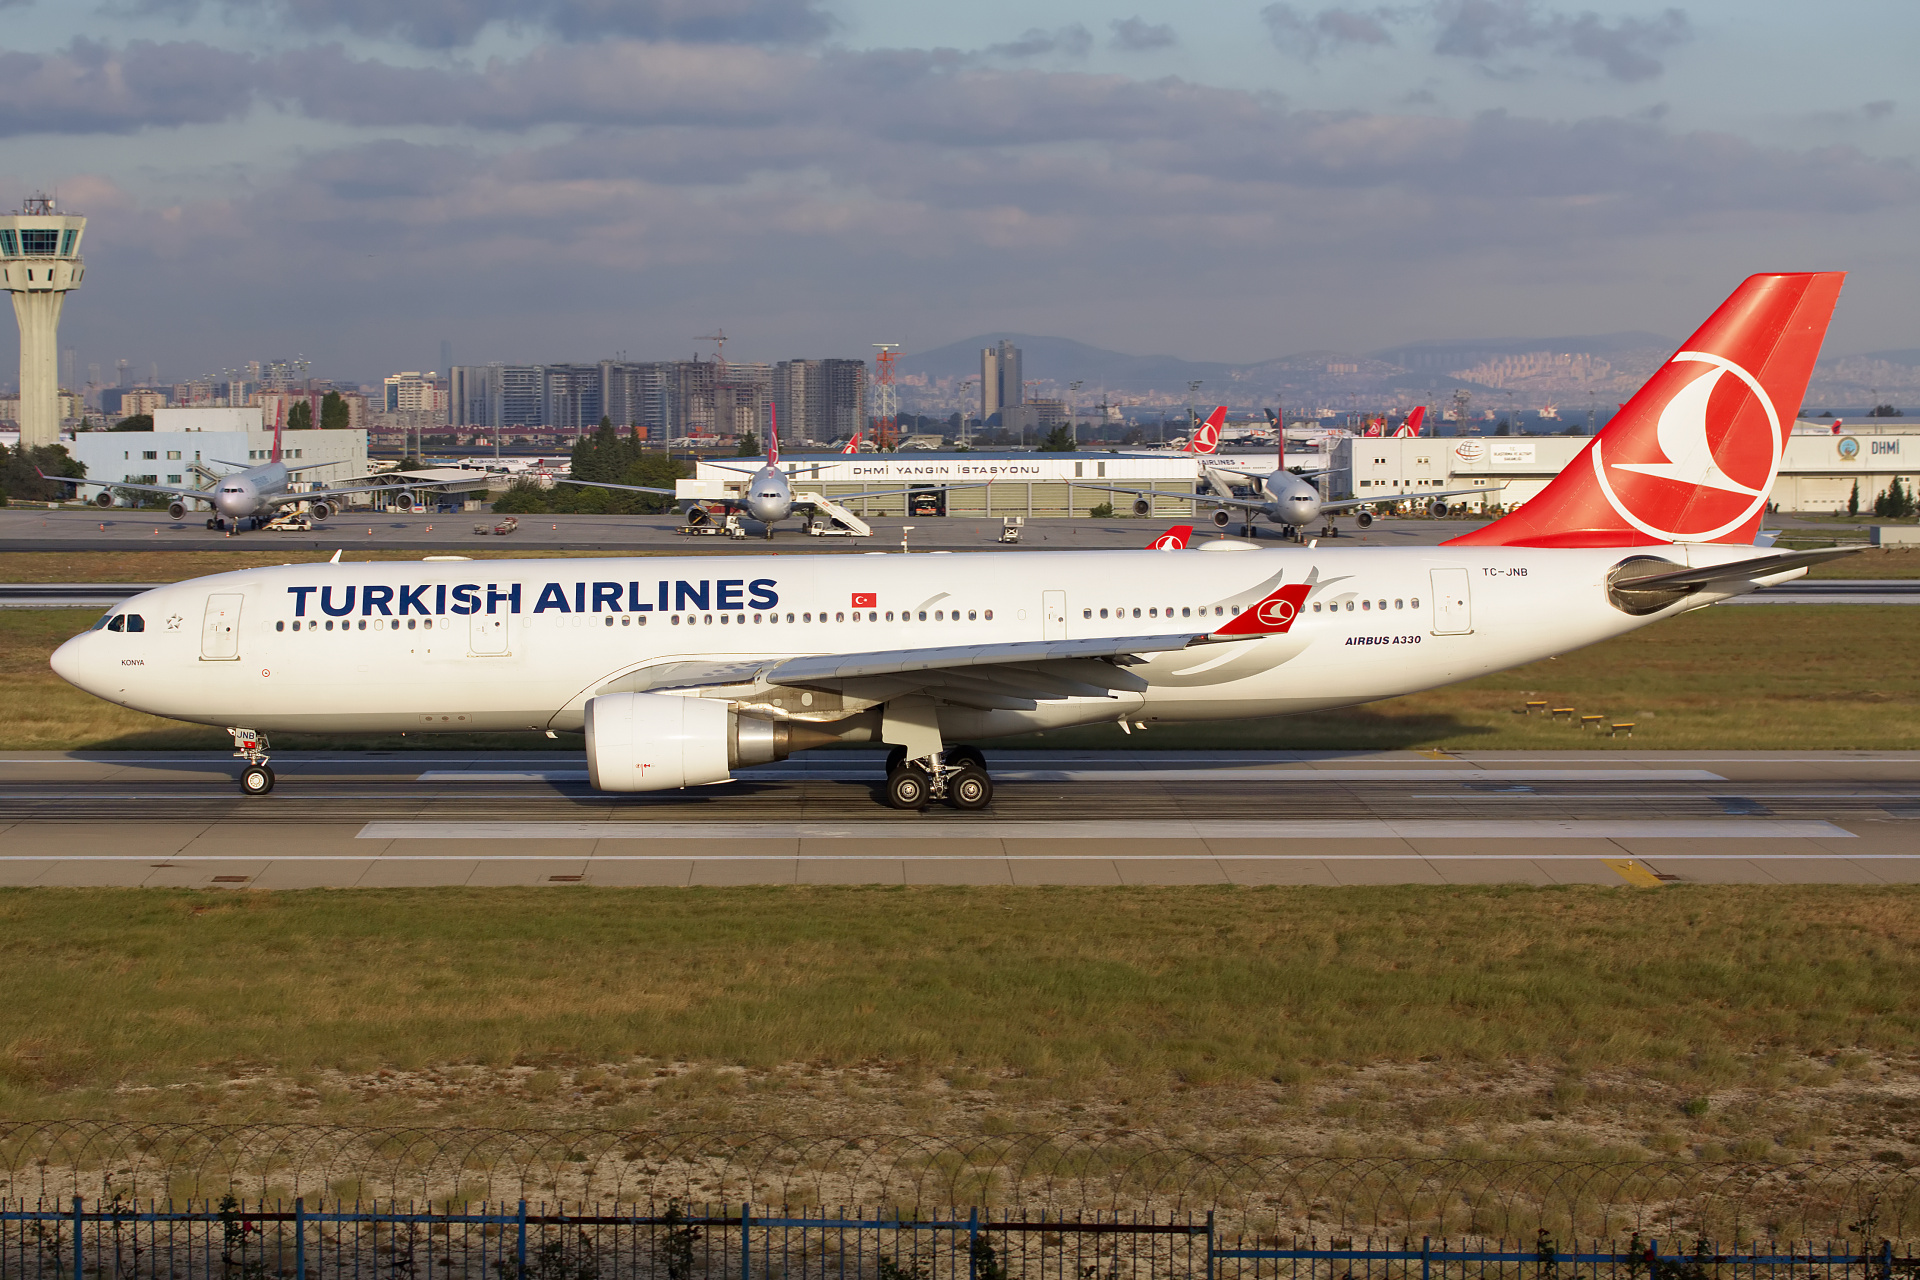 TC-JNB (Samoloty » Port Lotniczy im. Atatürka w Stambule » Airbus A330-200 » THY Turkish Airlines)